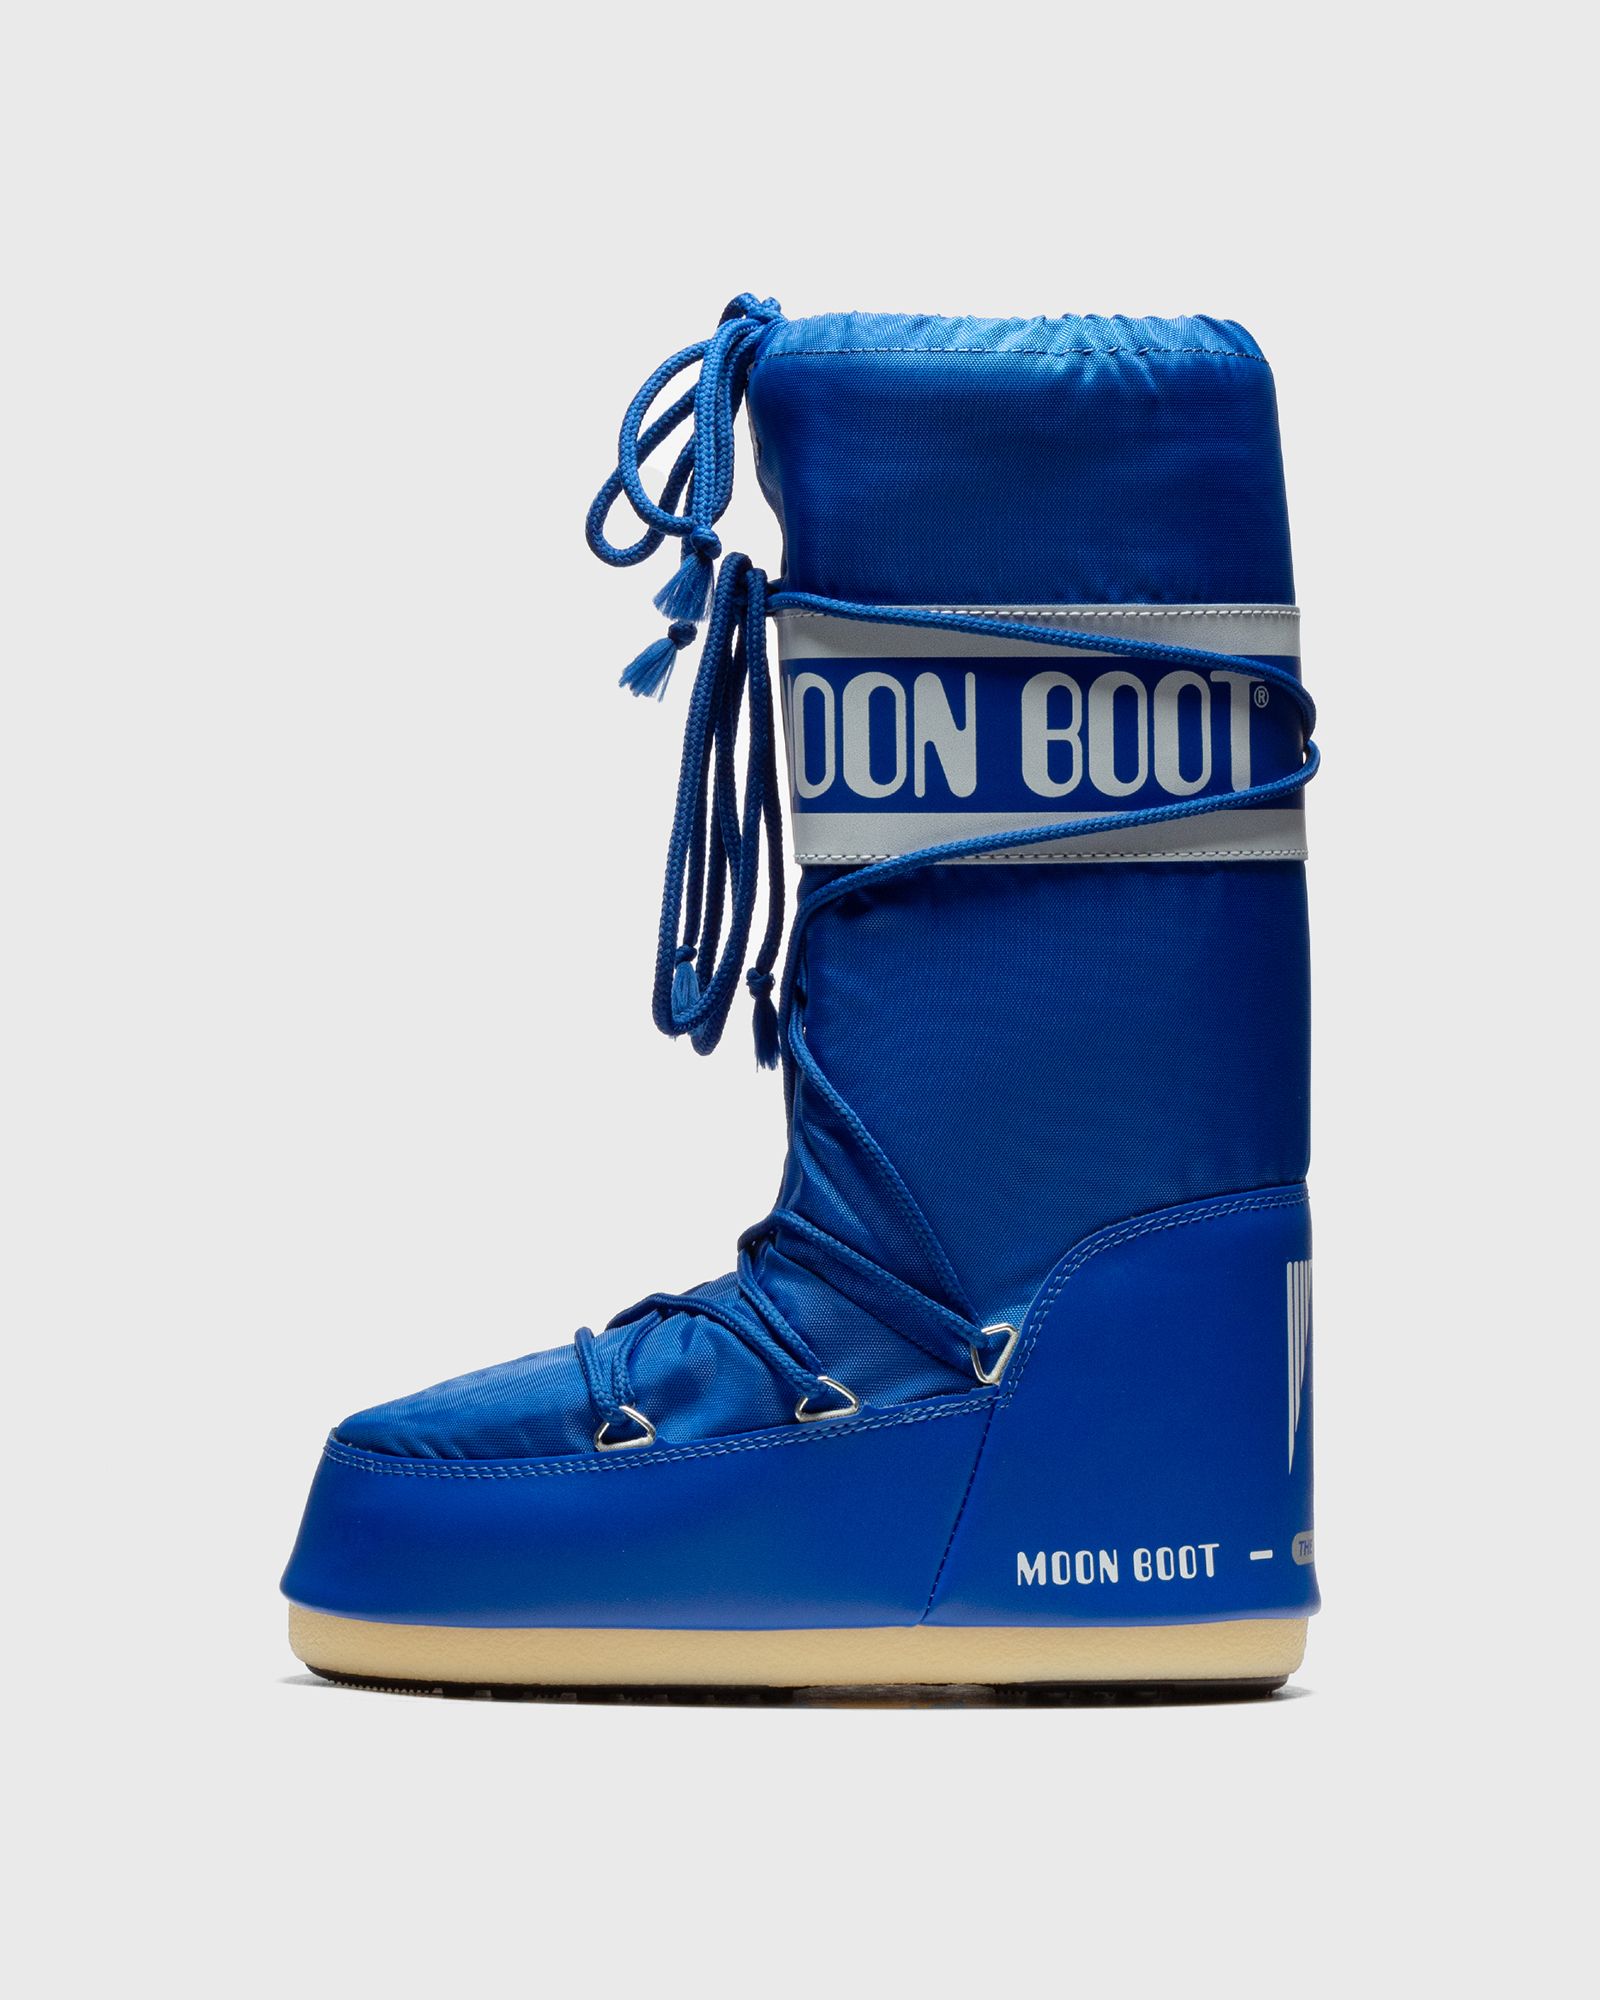 Moon Boot - icon nylon men boots blue in größe:42-44